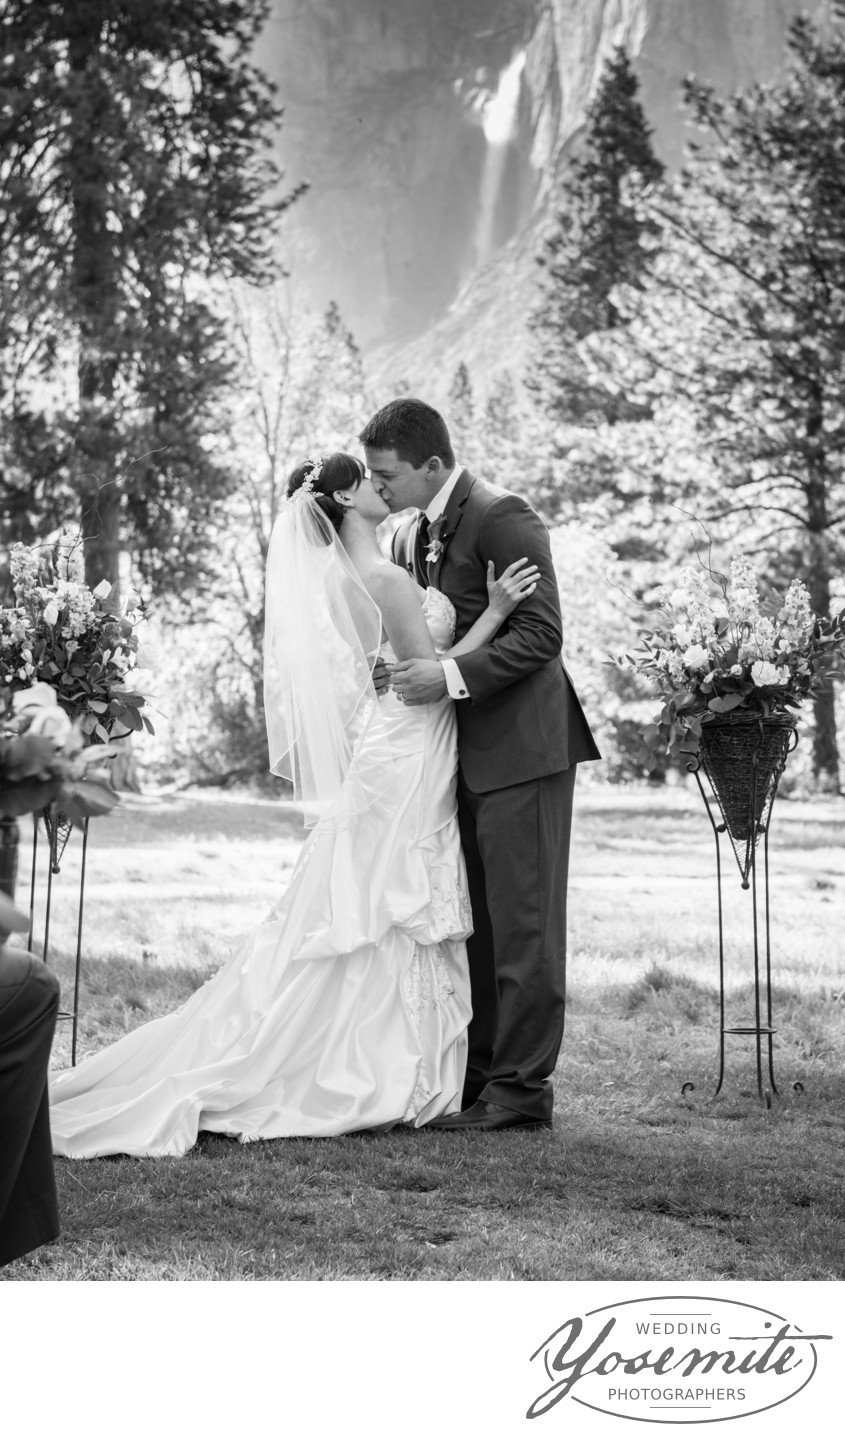 Yosemite Wedding Photography: Elegant Nature-Set Ceremony with Bride and Groom